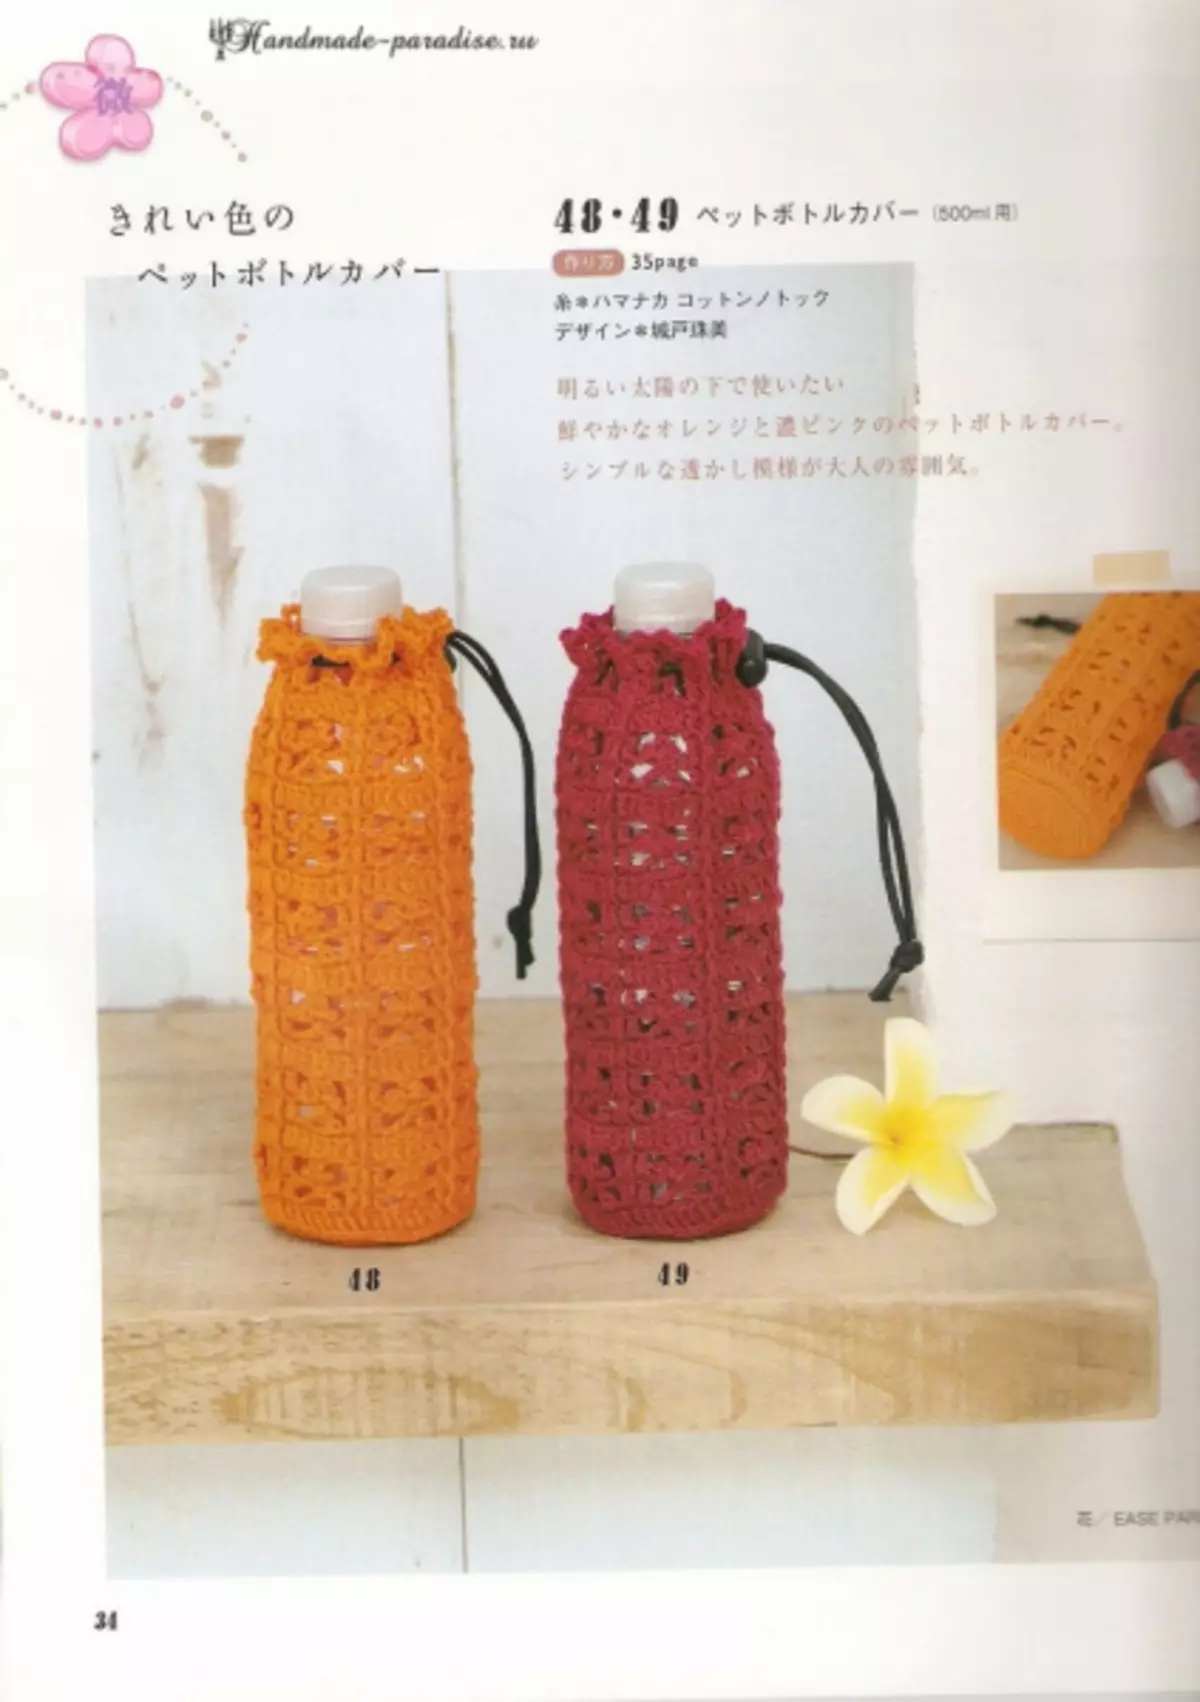 Crochet ಬೇಸಿಗೆ ಭಾಗಗಳು. ಜಪಾನಿನ ಪತ್ರಿಕೆ ಯೋಜನೆಗಳೊಂದಿಗೆ